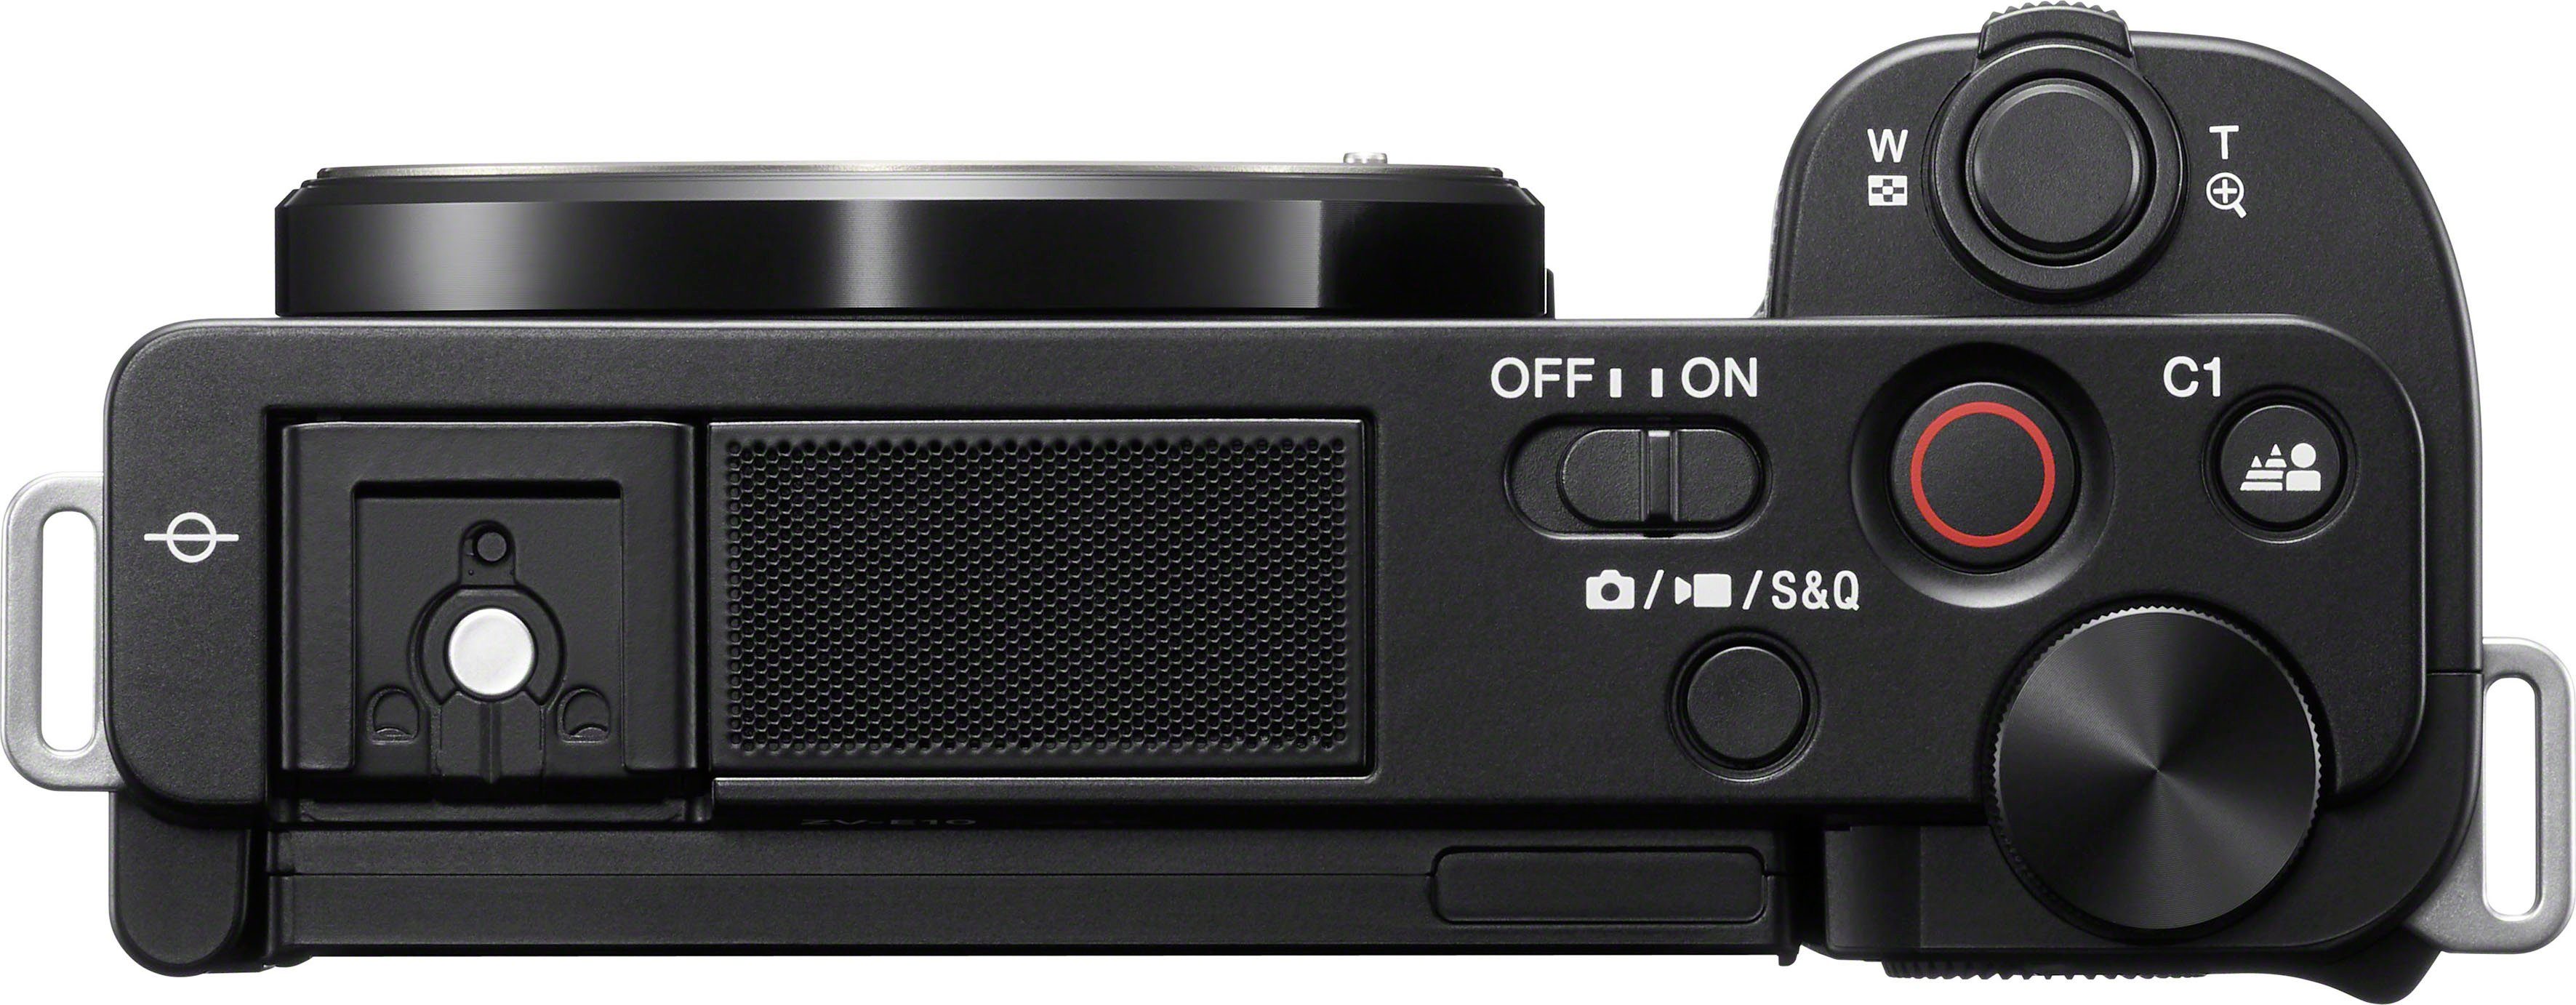 mit F3.5 24,2 SEL16-50 Bluetooth, (E - MP, 50 (SELP1650), PZ Systemkamera inkl. 5.6 Sony Display WLAN schwenkbarem mm OSS - (WiFi), Objektiv) ZV-E10L Vlog-Kamera 16